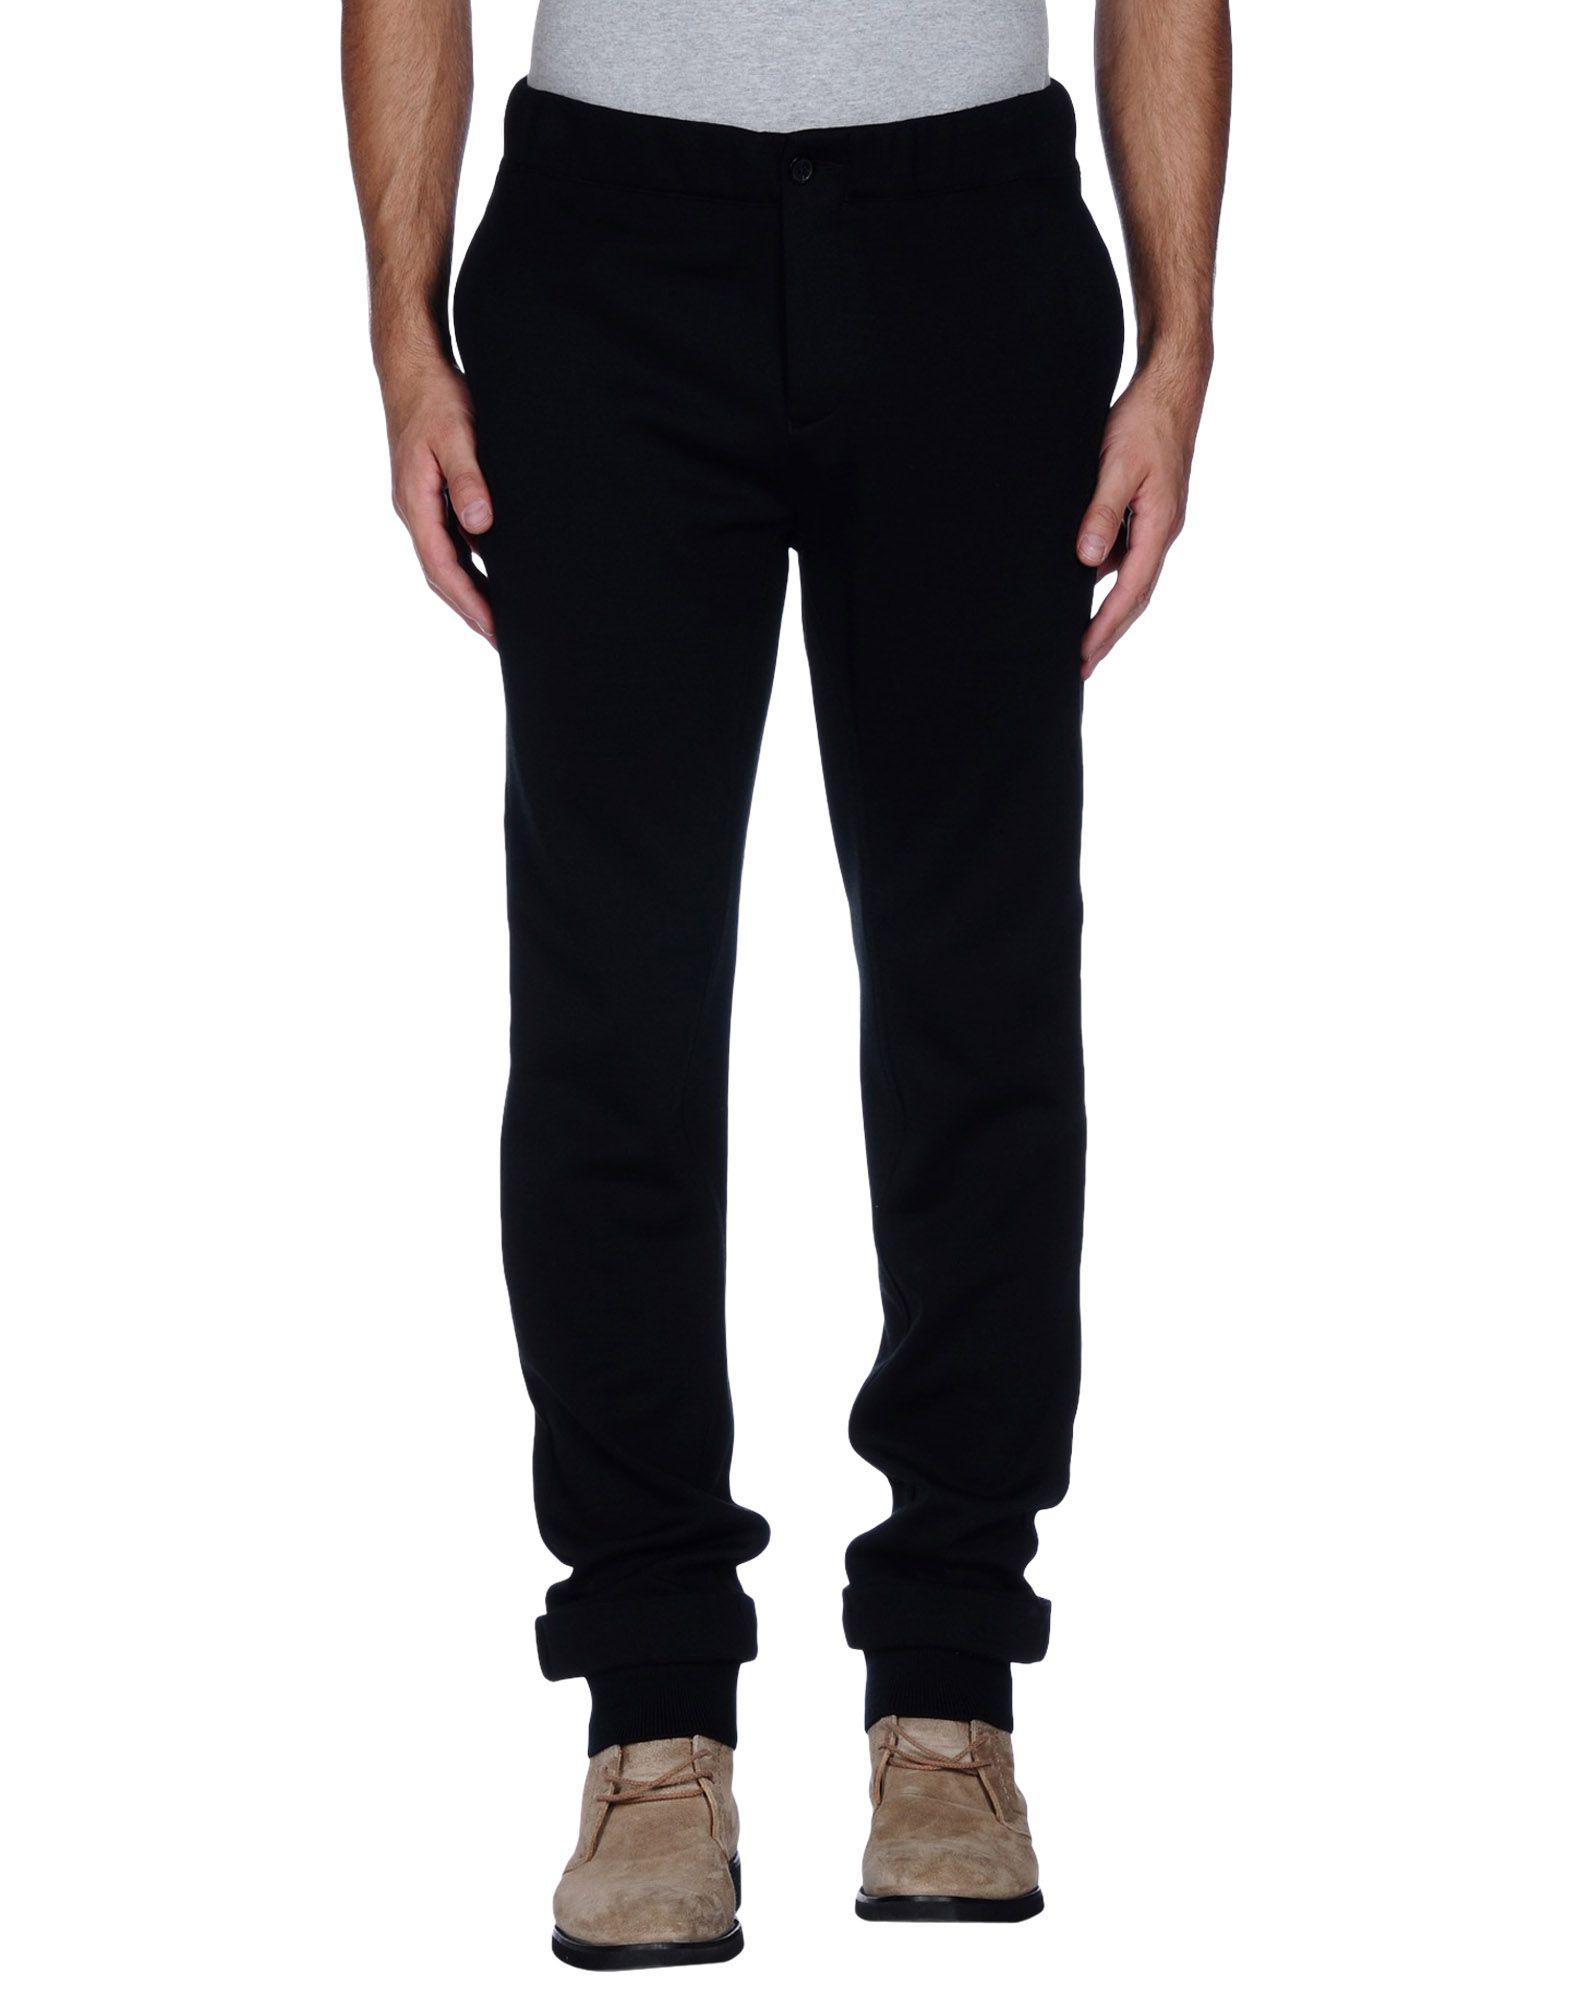 Lyst - Emporio armani Casual Pants in Black for Men